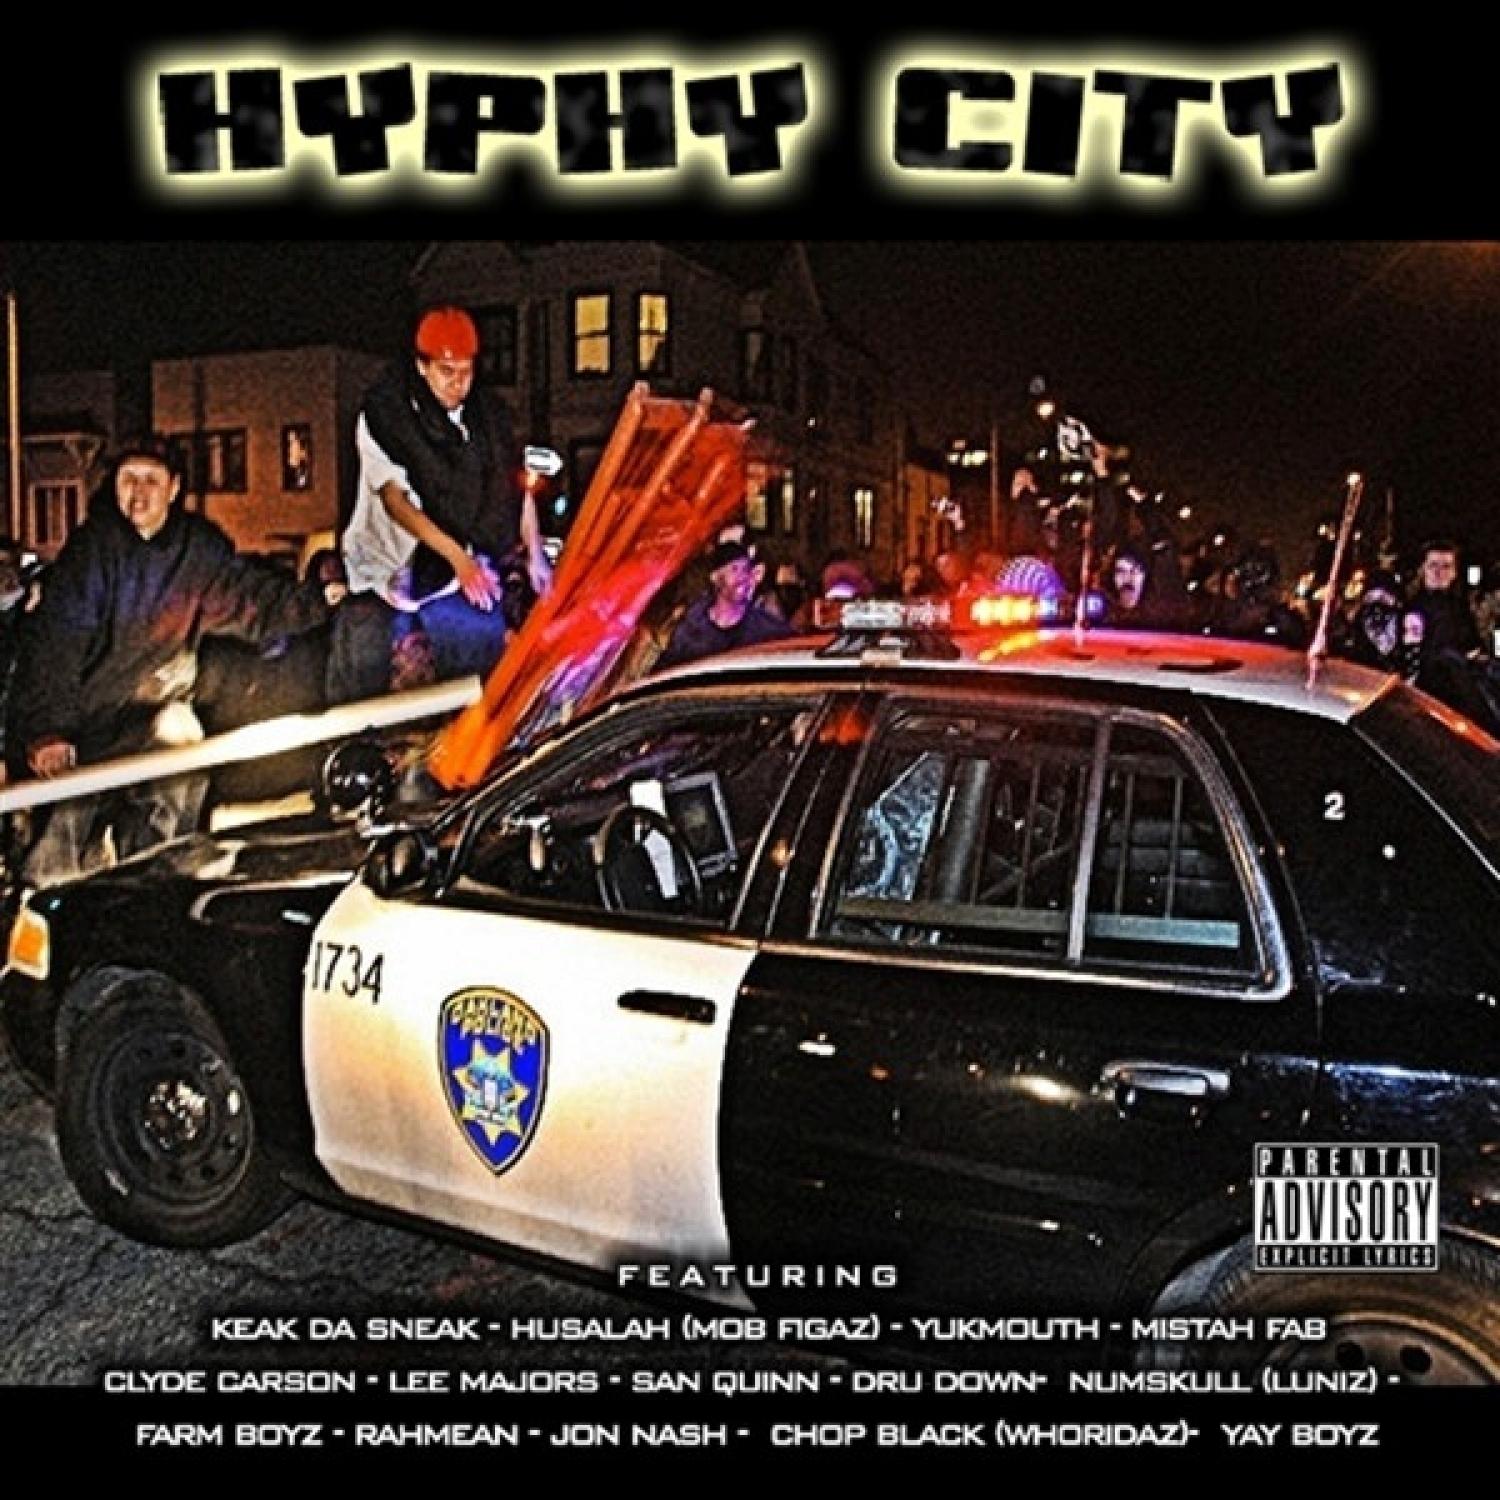 Hyphy City